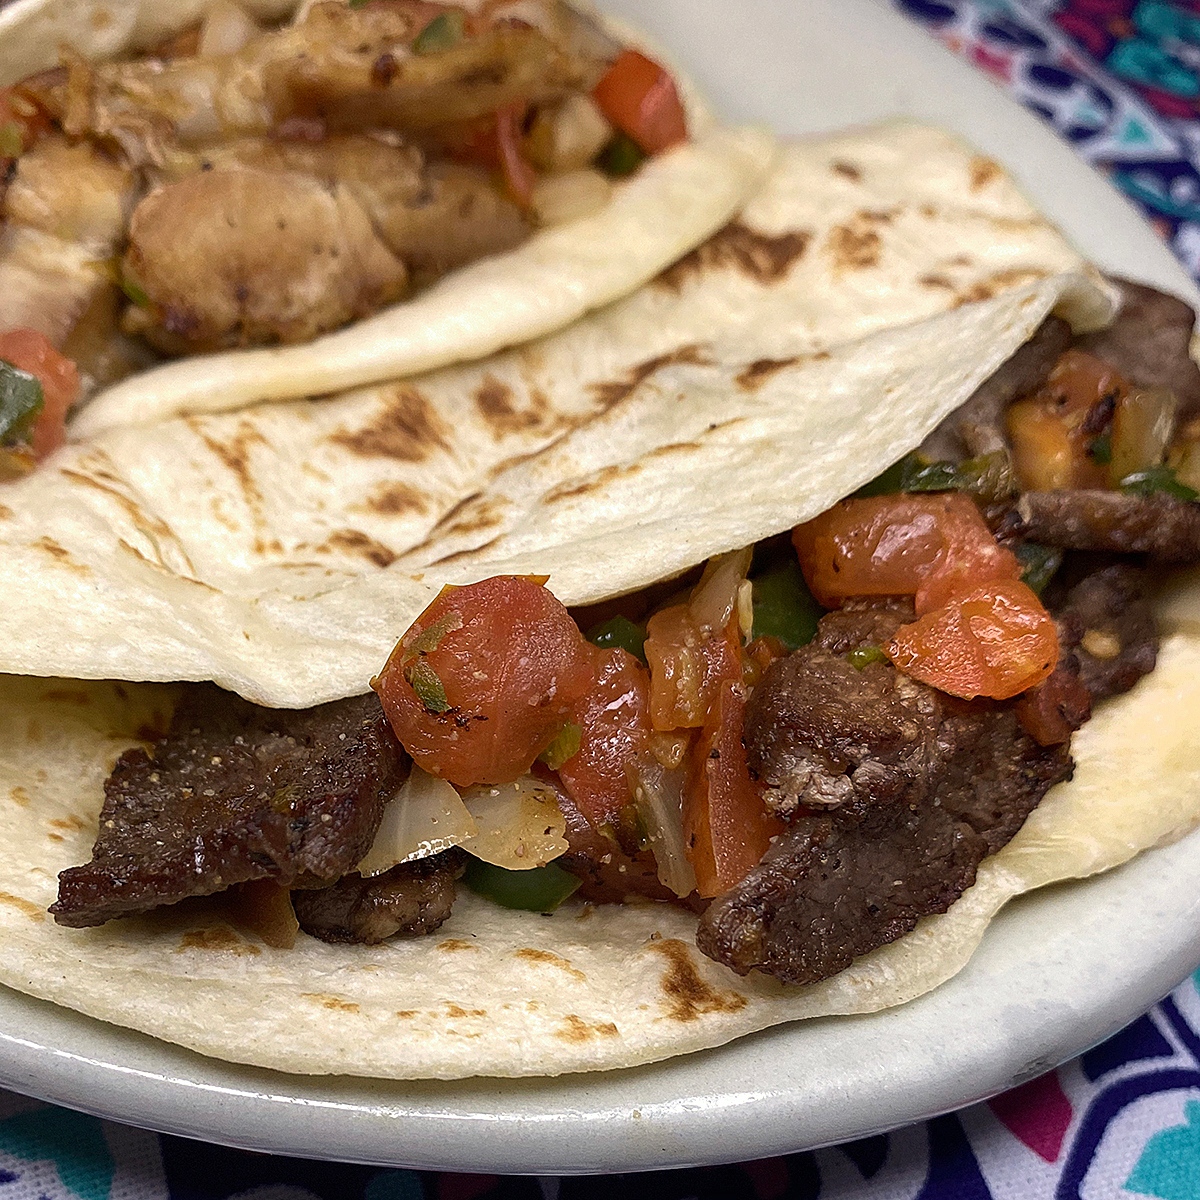 🌮 Tacos galore and more – That’s Tia’s promise to you. 😁

👉🏼 Order Online at tiastacohuttx.com.

#tiastacohut #tacos #breakfasttacos #texmex #safoodie #safood #sanantoniofood #satxfood #safoodpics #eatlocalsa #sanantonioeats